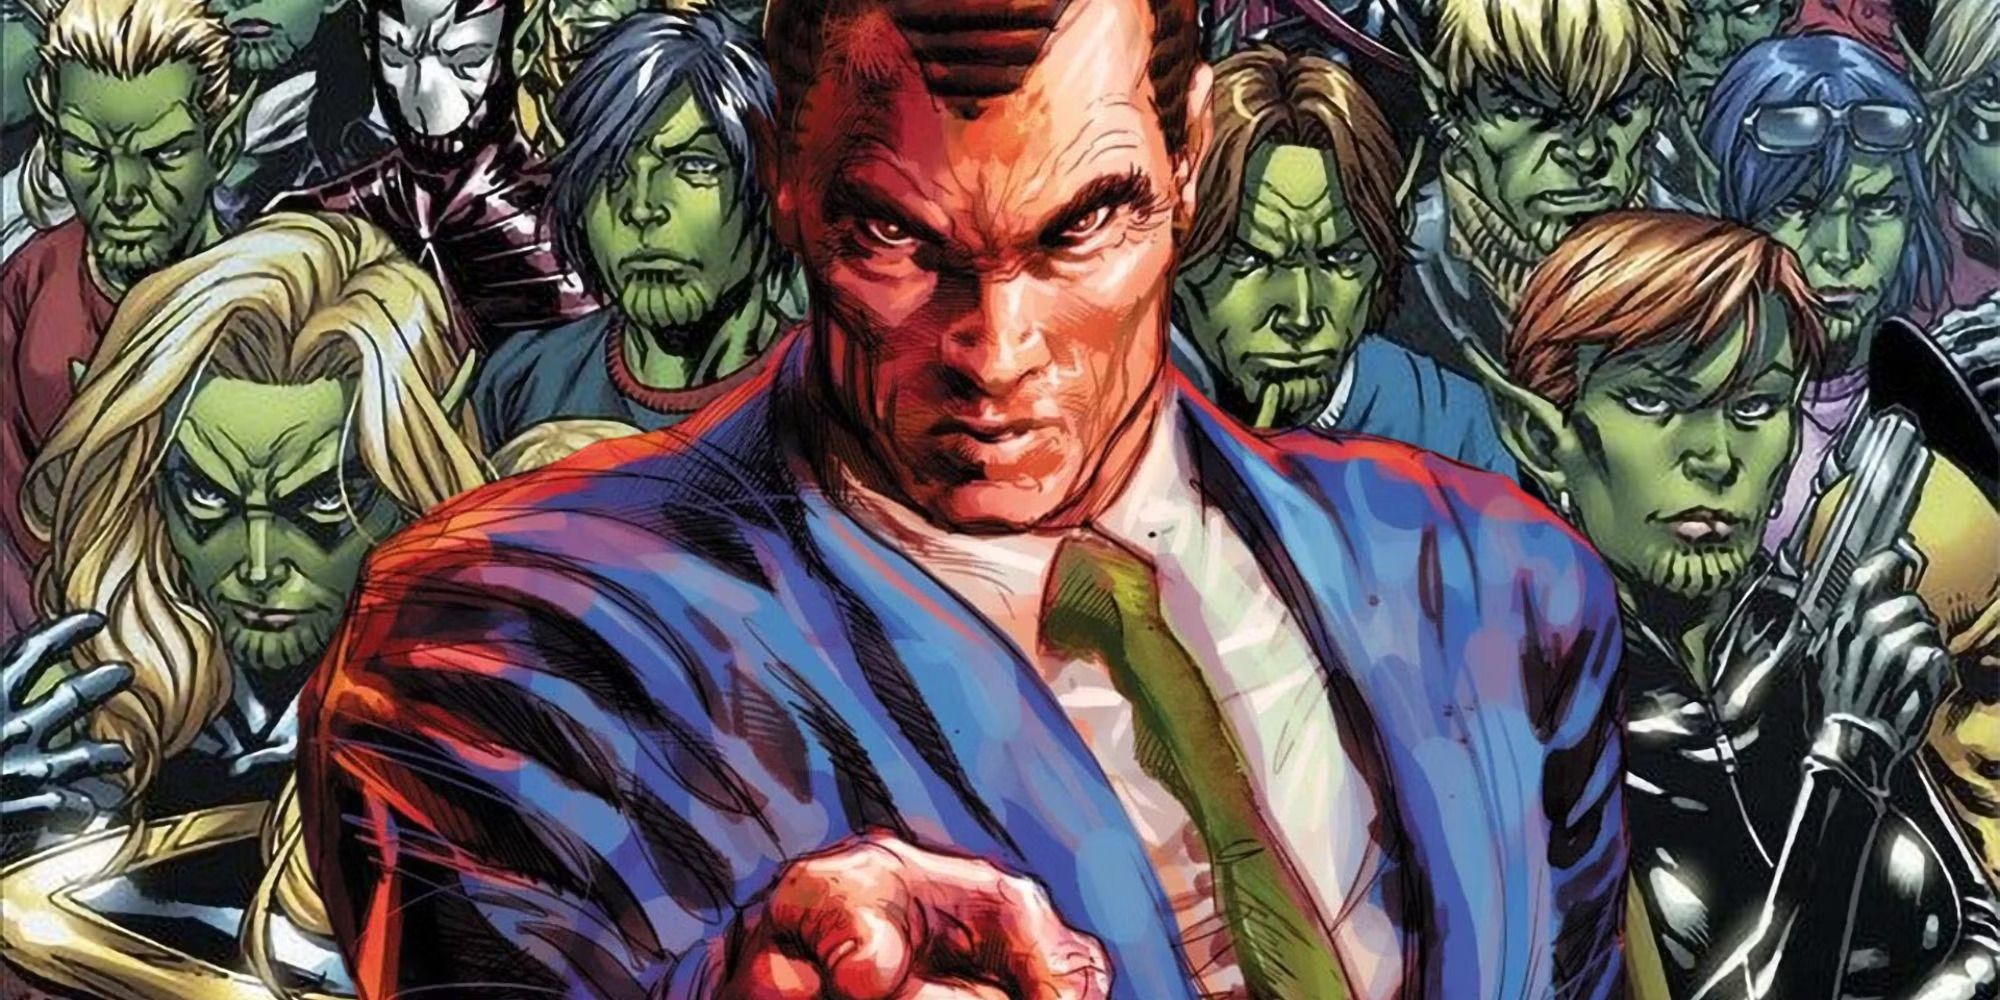 Norman Osborn in front of Skrulls.